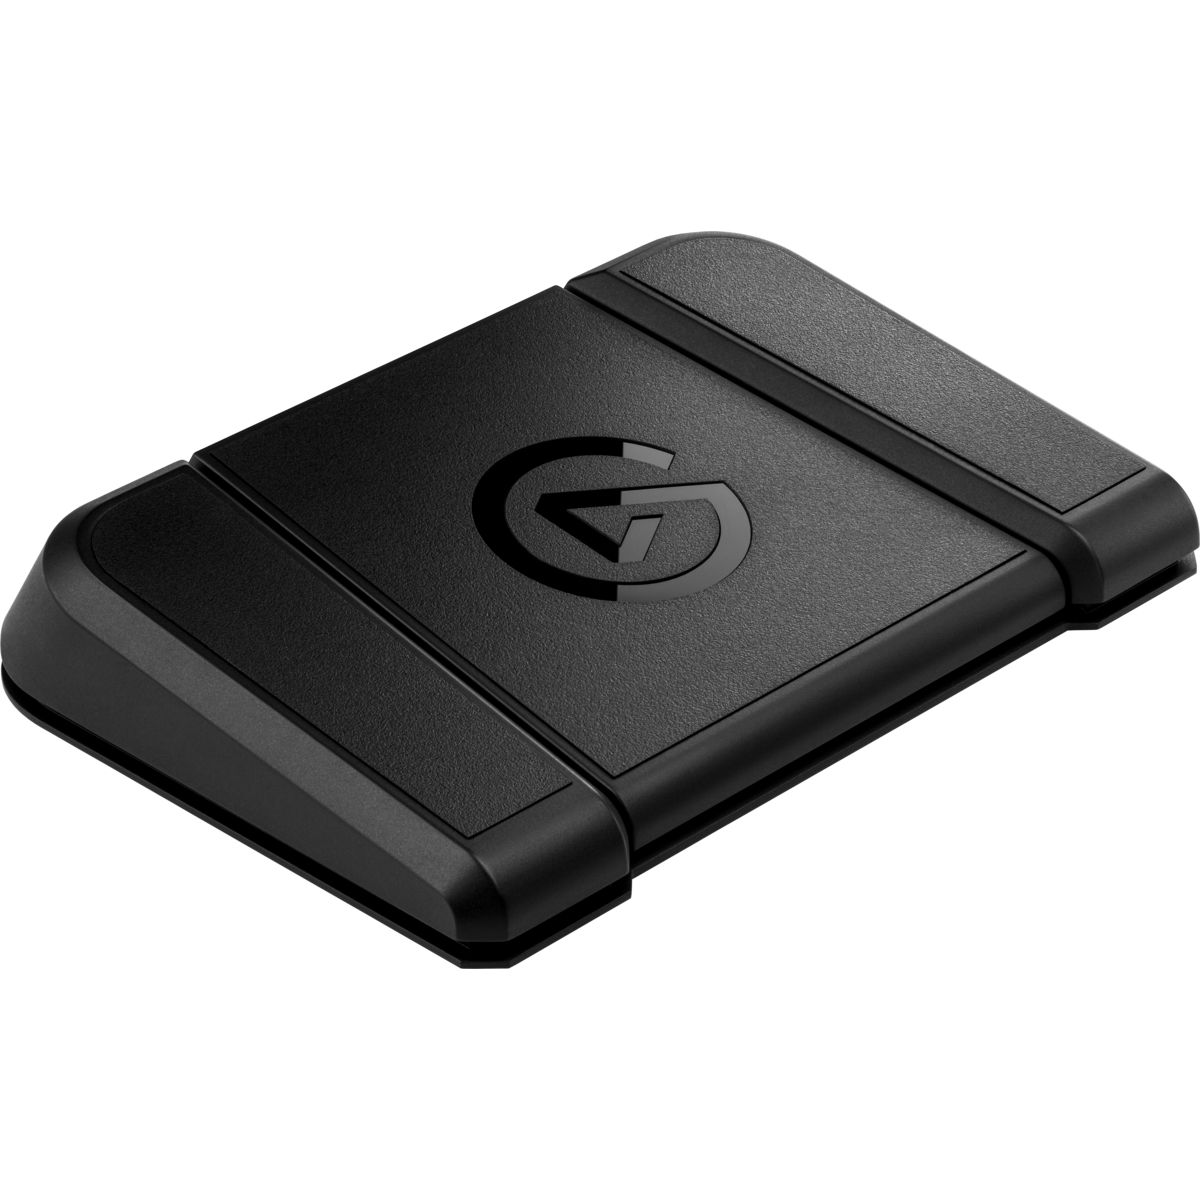 10GBF9901 - Pedal ELGATO Stream Deck pedal (10GBF9901)